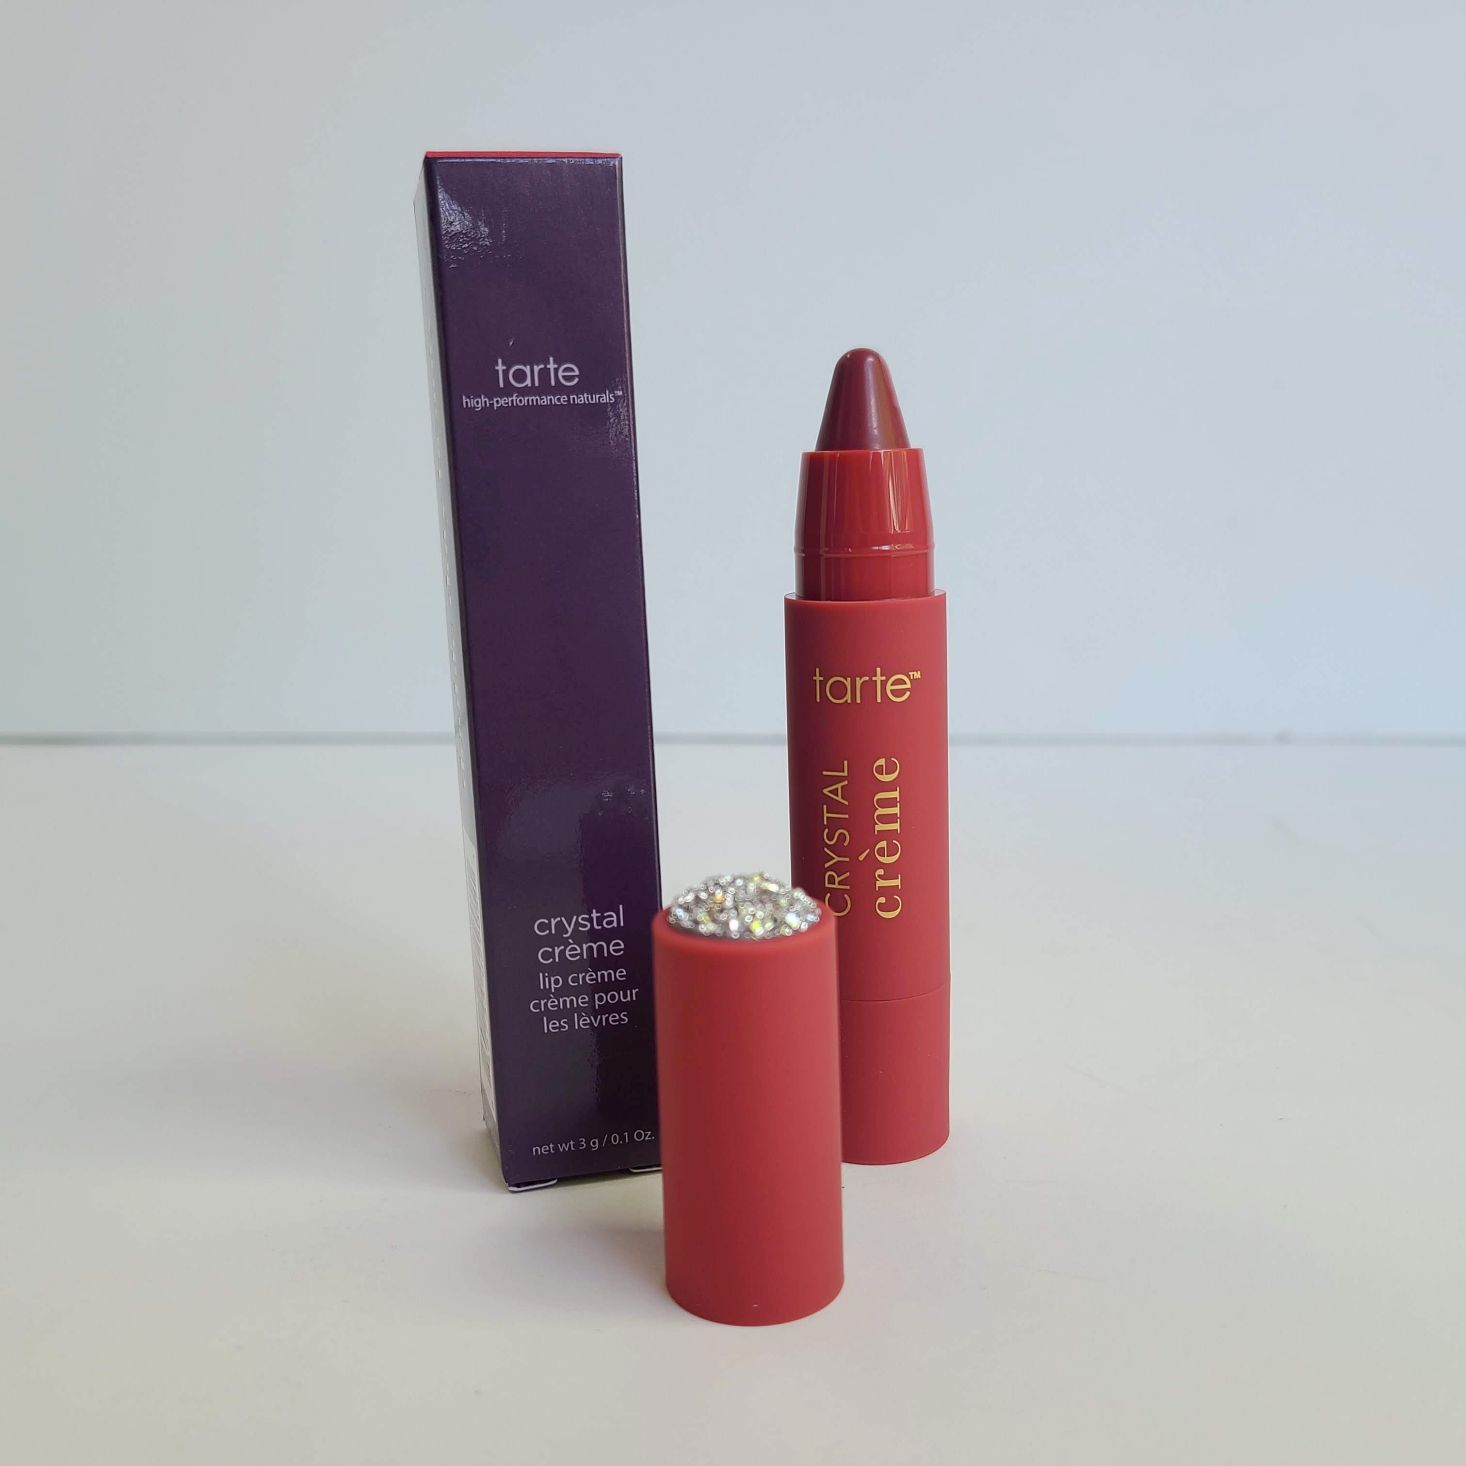 Tarte Create Your Own Beauty Kit June 2020 lip crayon